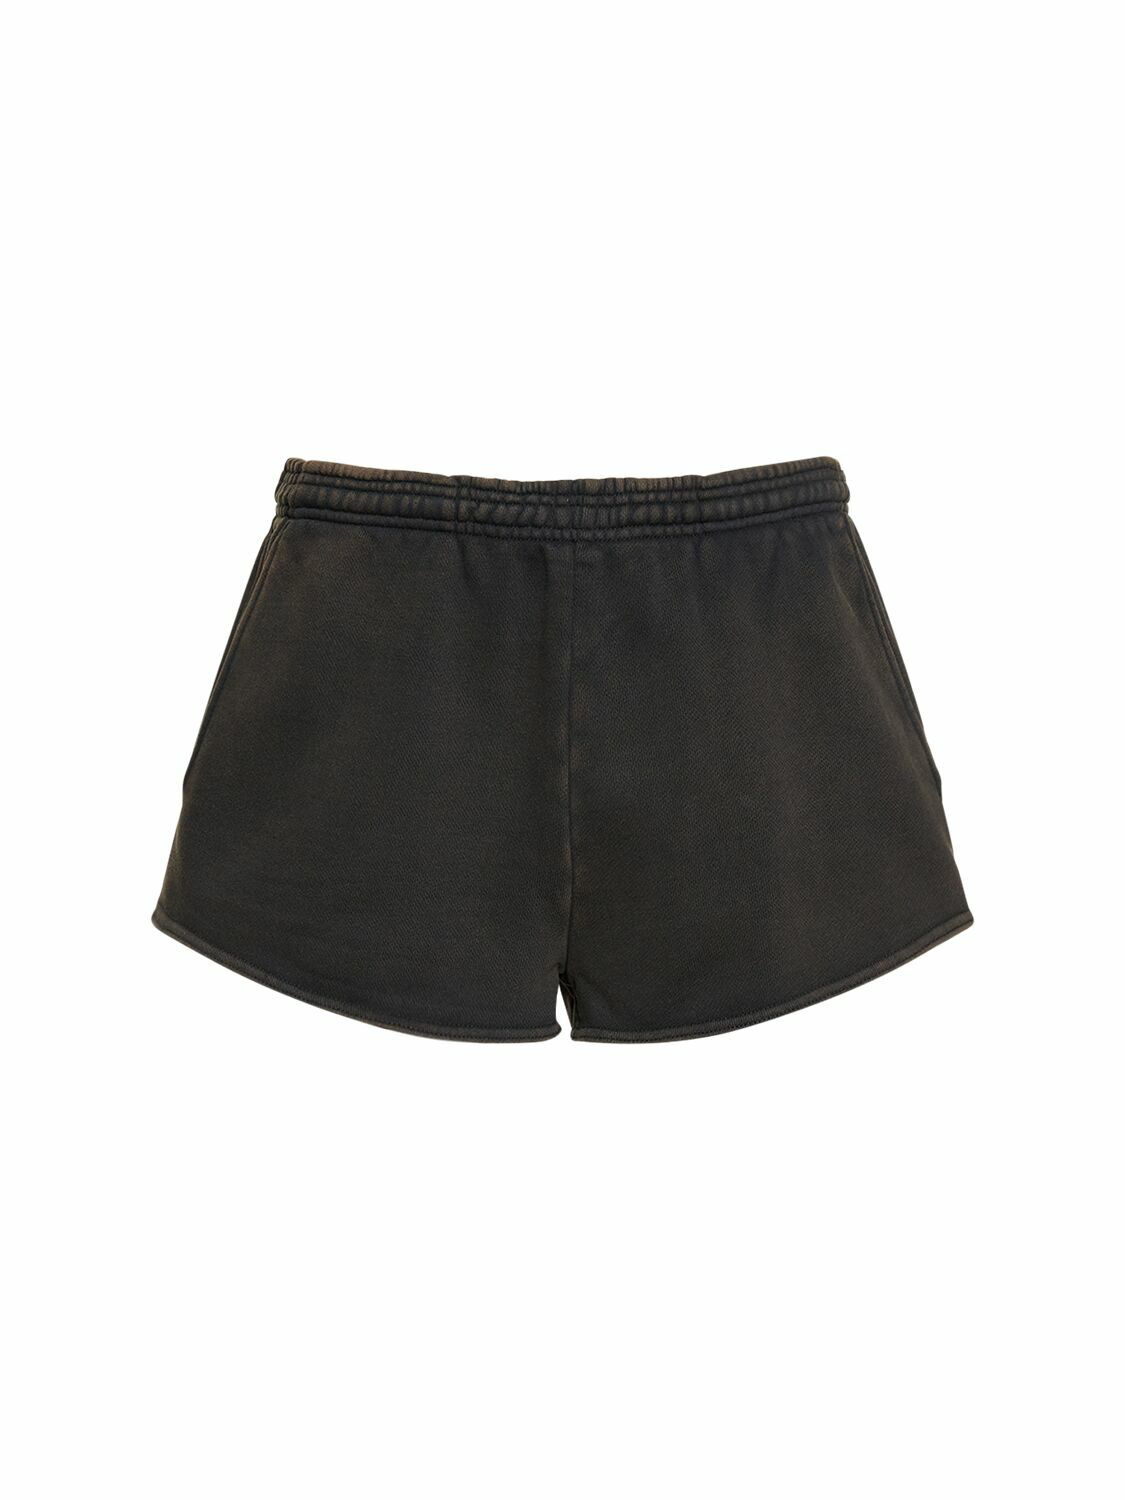 Soft Surroundings, Shorts, Soft Surroundings Superla Stretch 9shorts In  Black